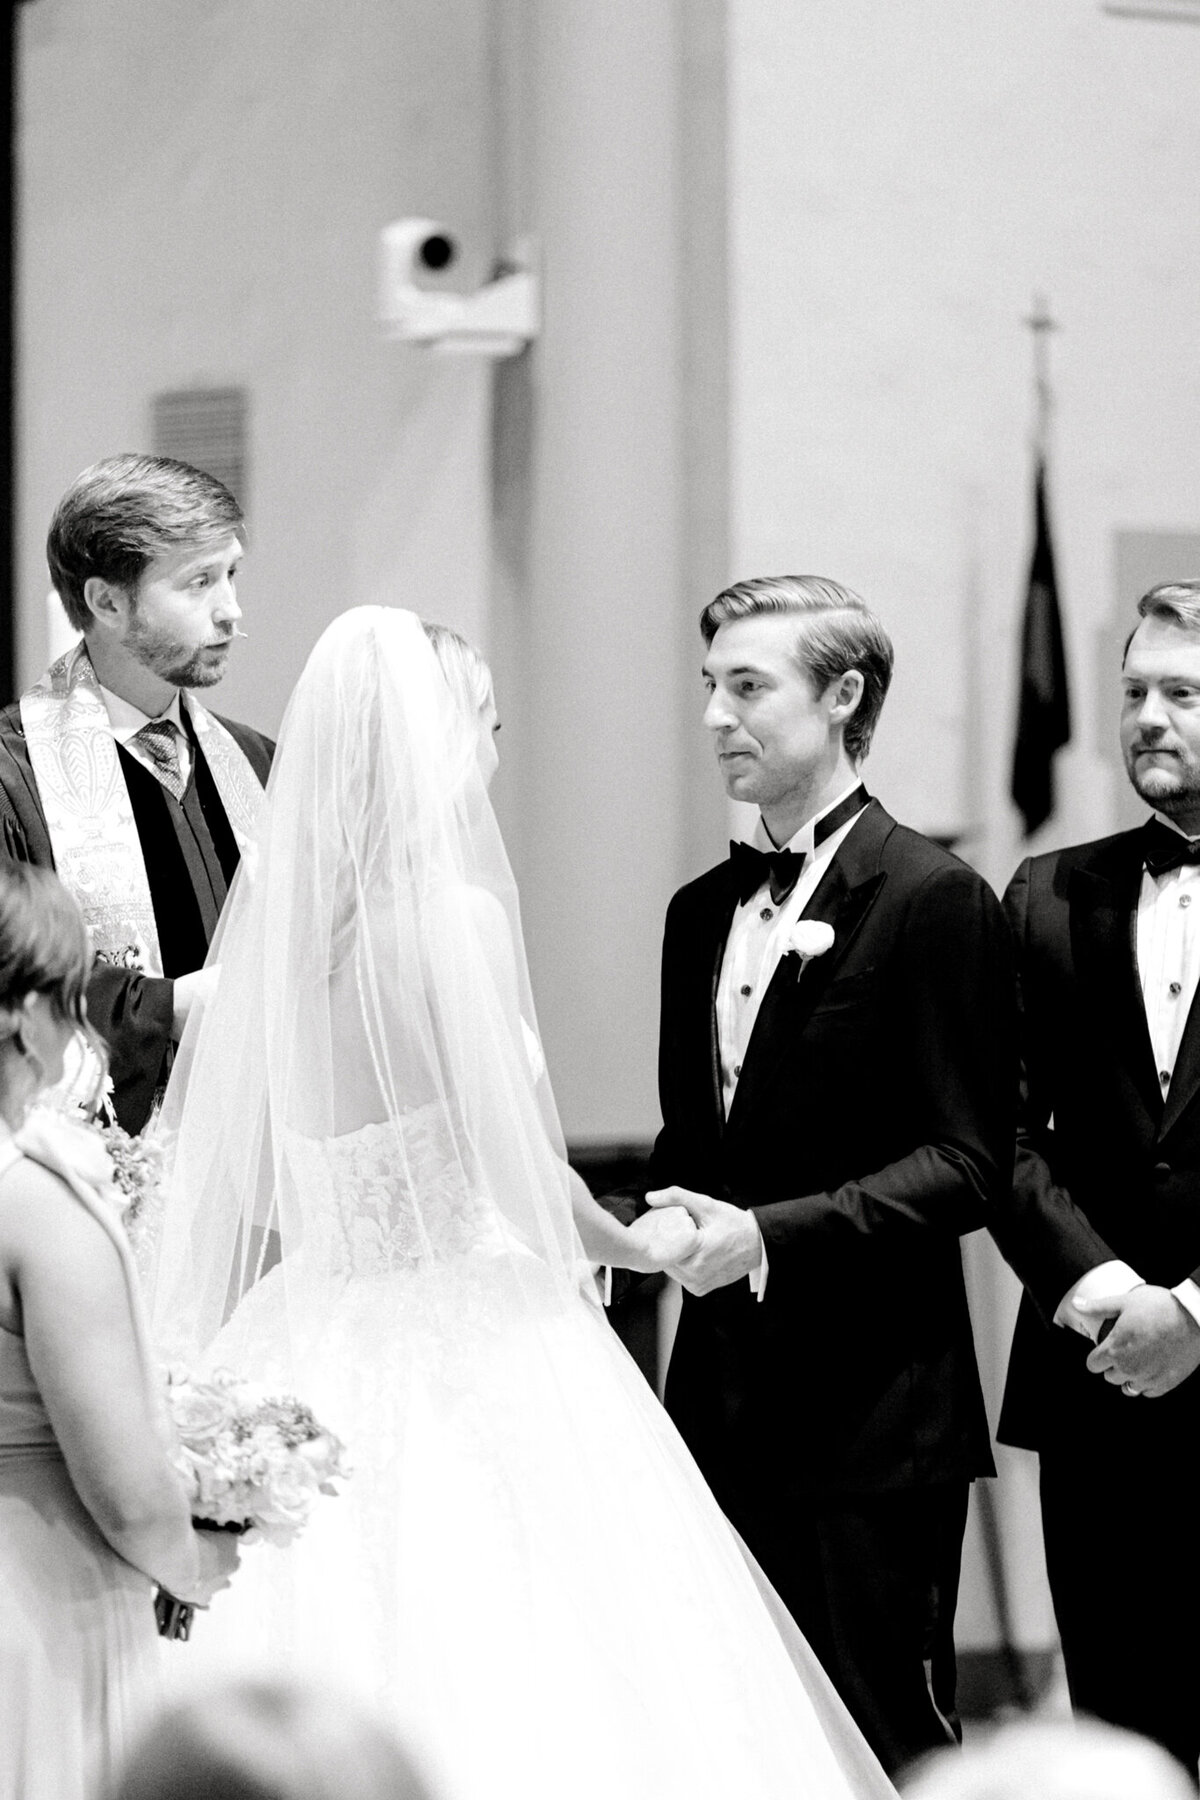 Shelby & Thomas's Wedding at HPUMC The Room on Main | Dallas Wedding Photographer | Sami Kathryn Photography-126